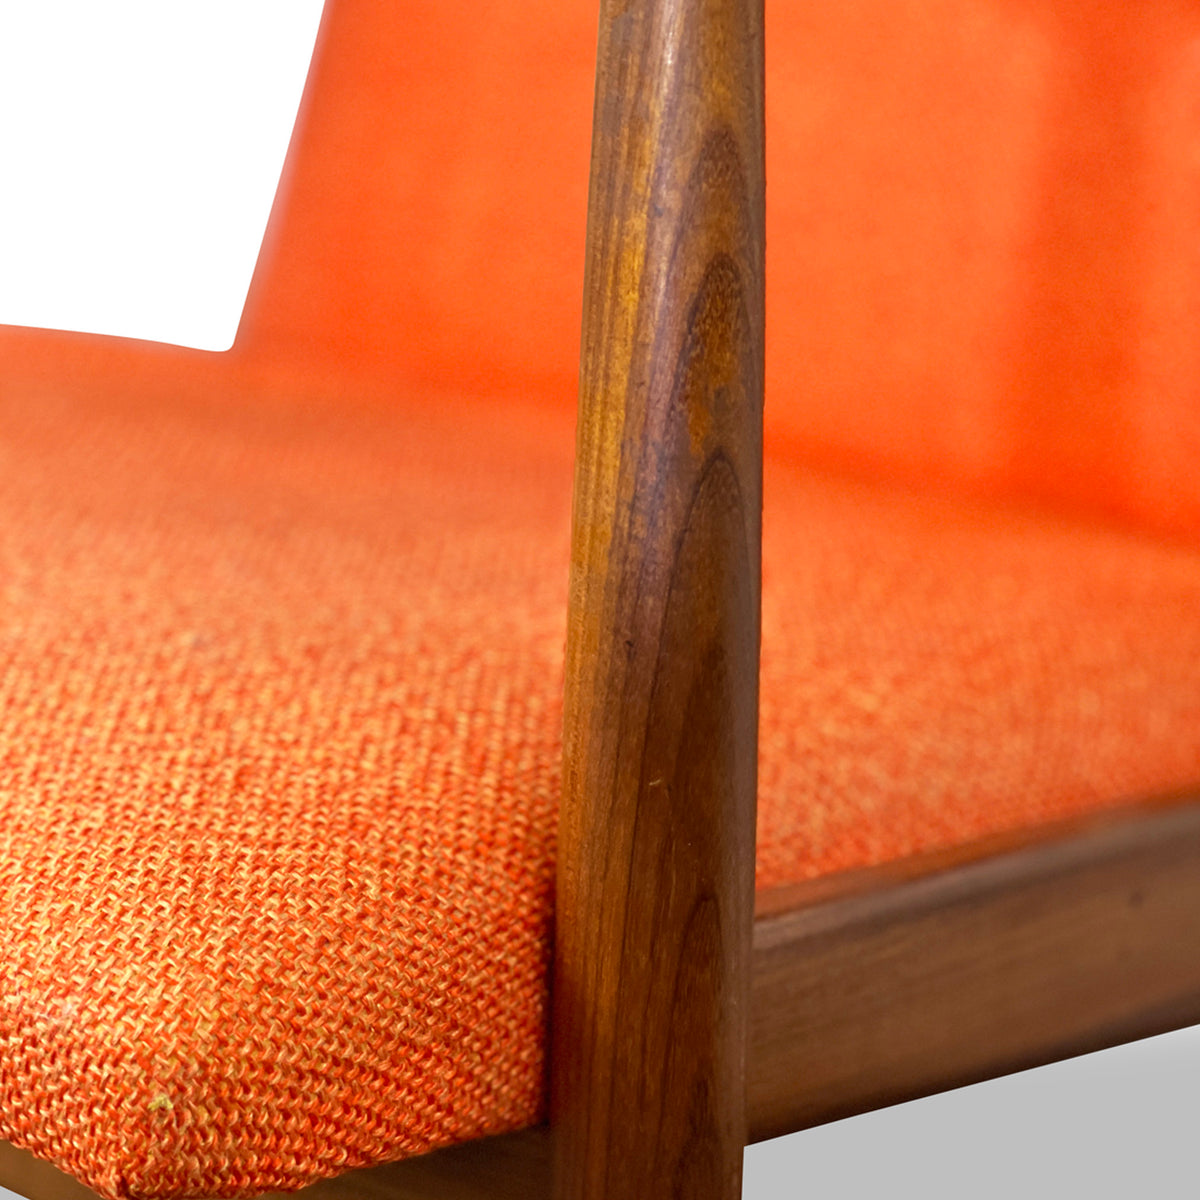 Norwegian Lounge Chairs by Sandvik Mobelfabrik